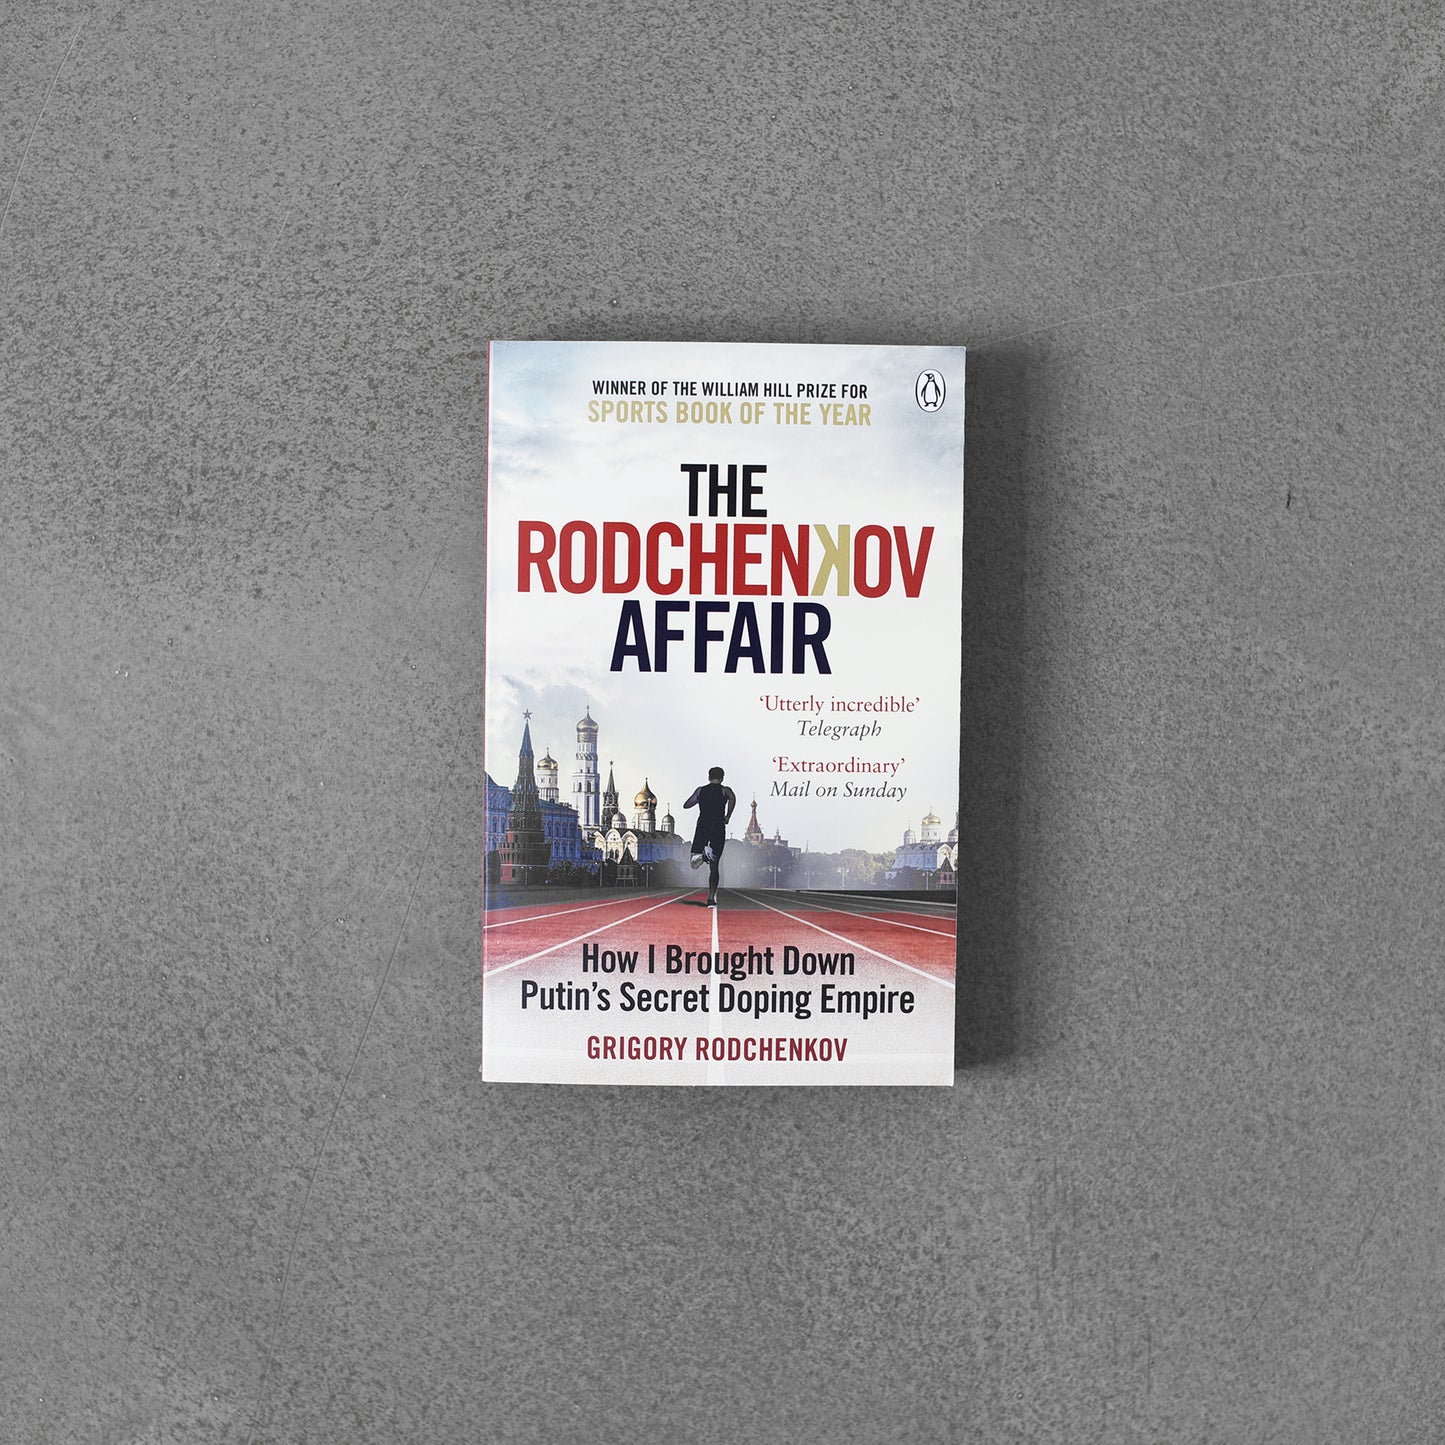 Rodchenkov Affair, Grigory Rodchenkov